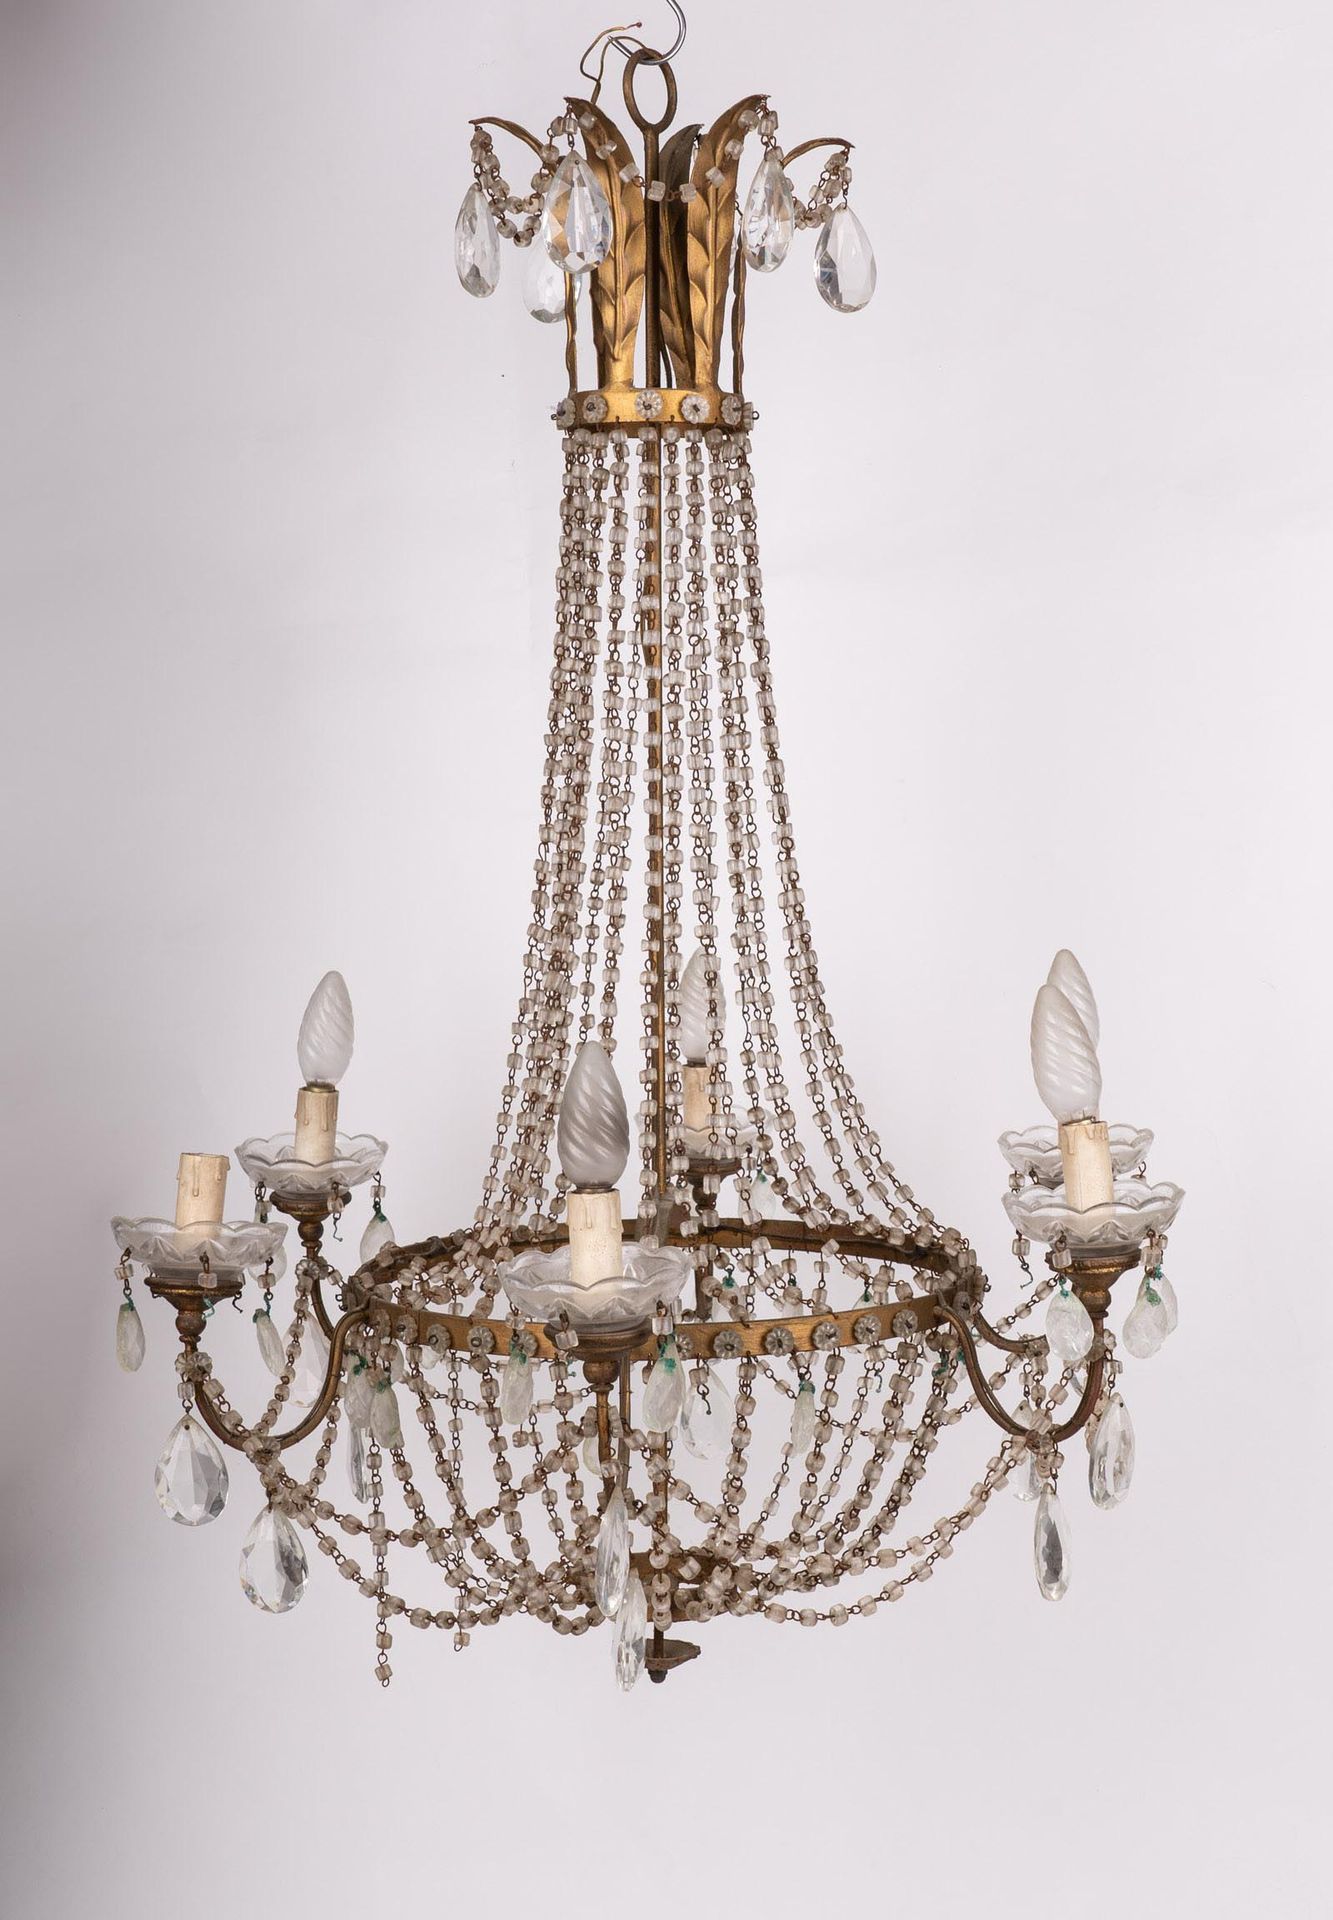 Null 篮子吊灯


Liguria 19世纪


镀金金属，带项链和刻面玻璃垂饰，六灯，有缺陷